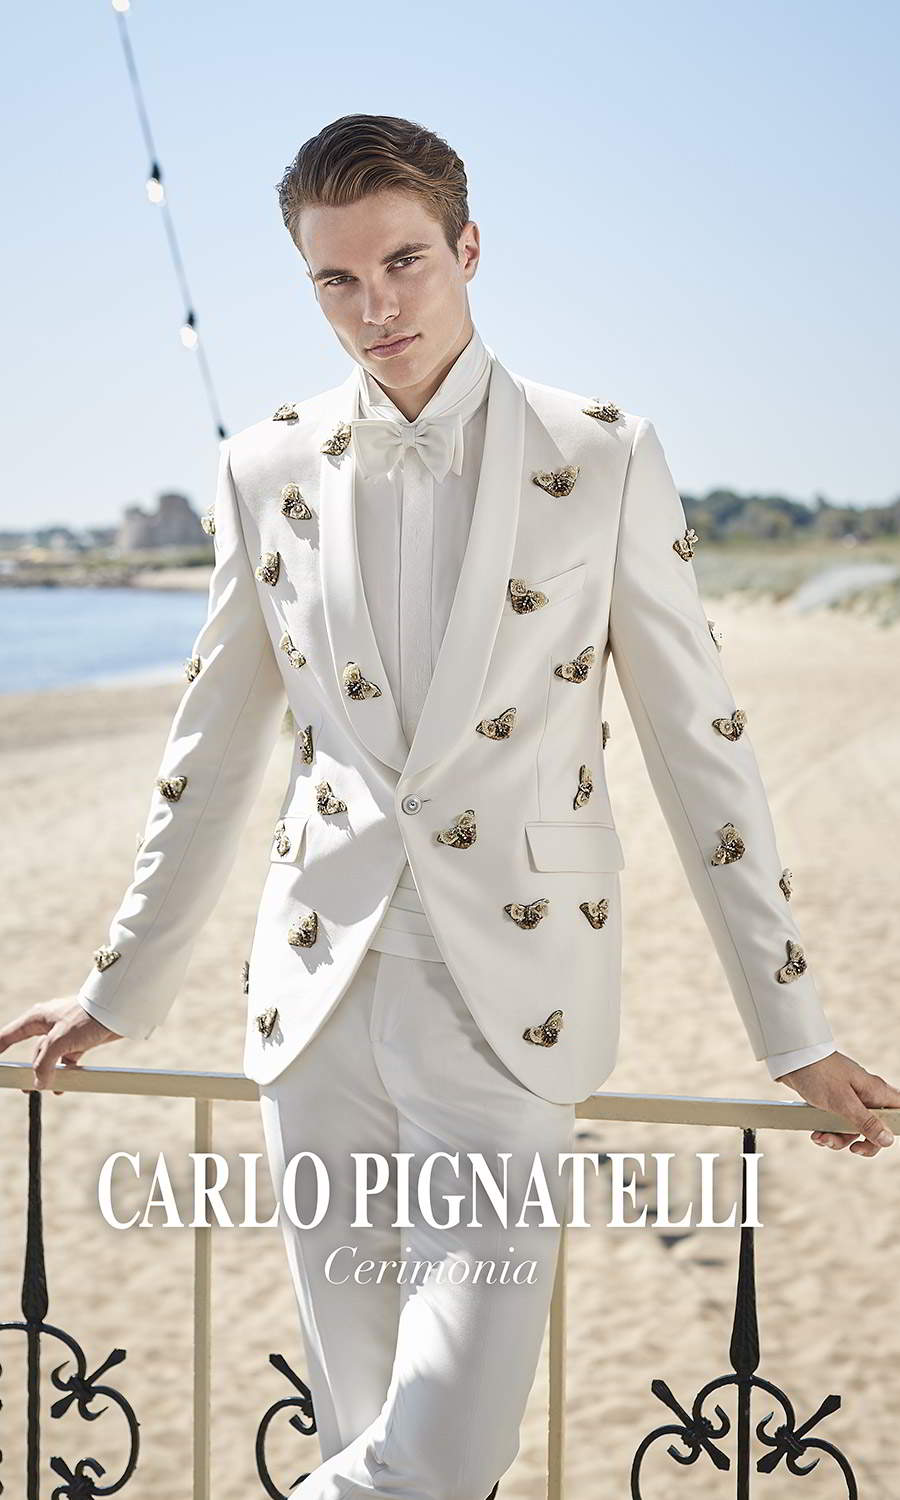 carlo pignatelli 2020 bridal cerimonia menswear modern designer white summer tuxedo suit0wing collar shirt bowtie embellished (11) mv